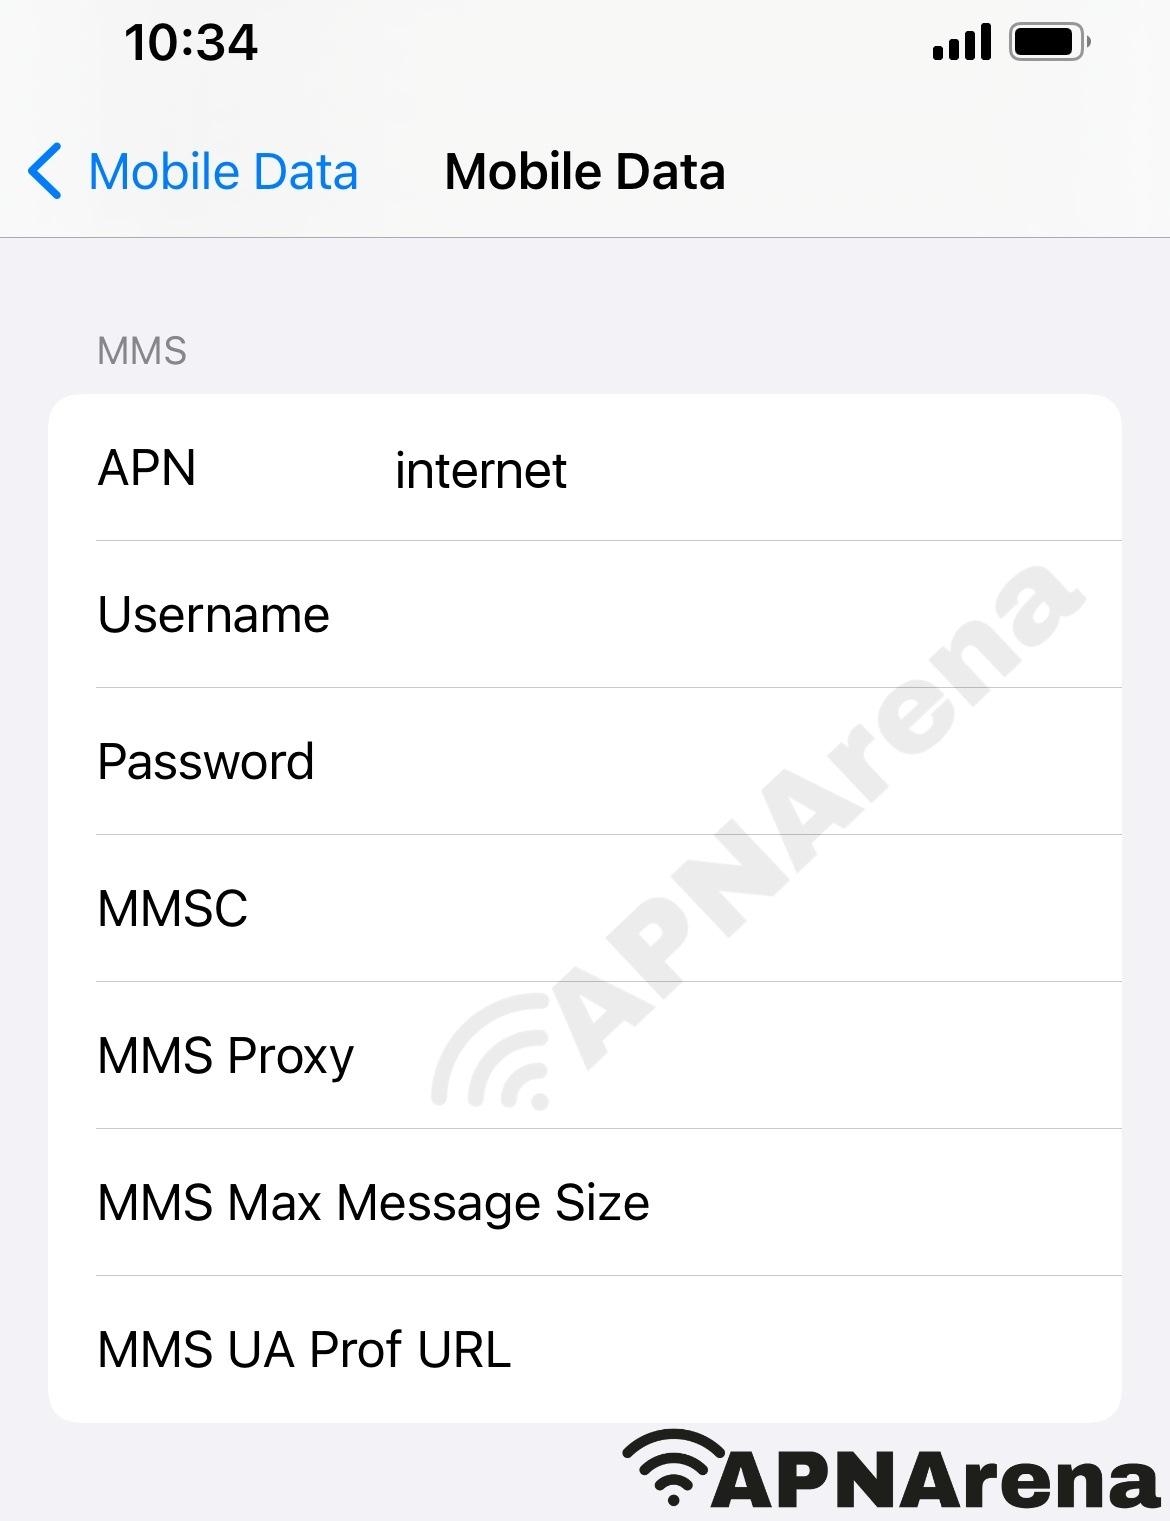 HEMA mobiel MMS Settings for iPhone